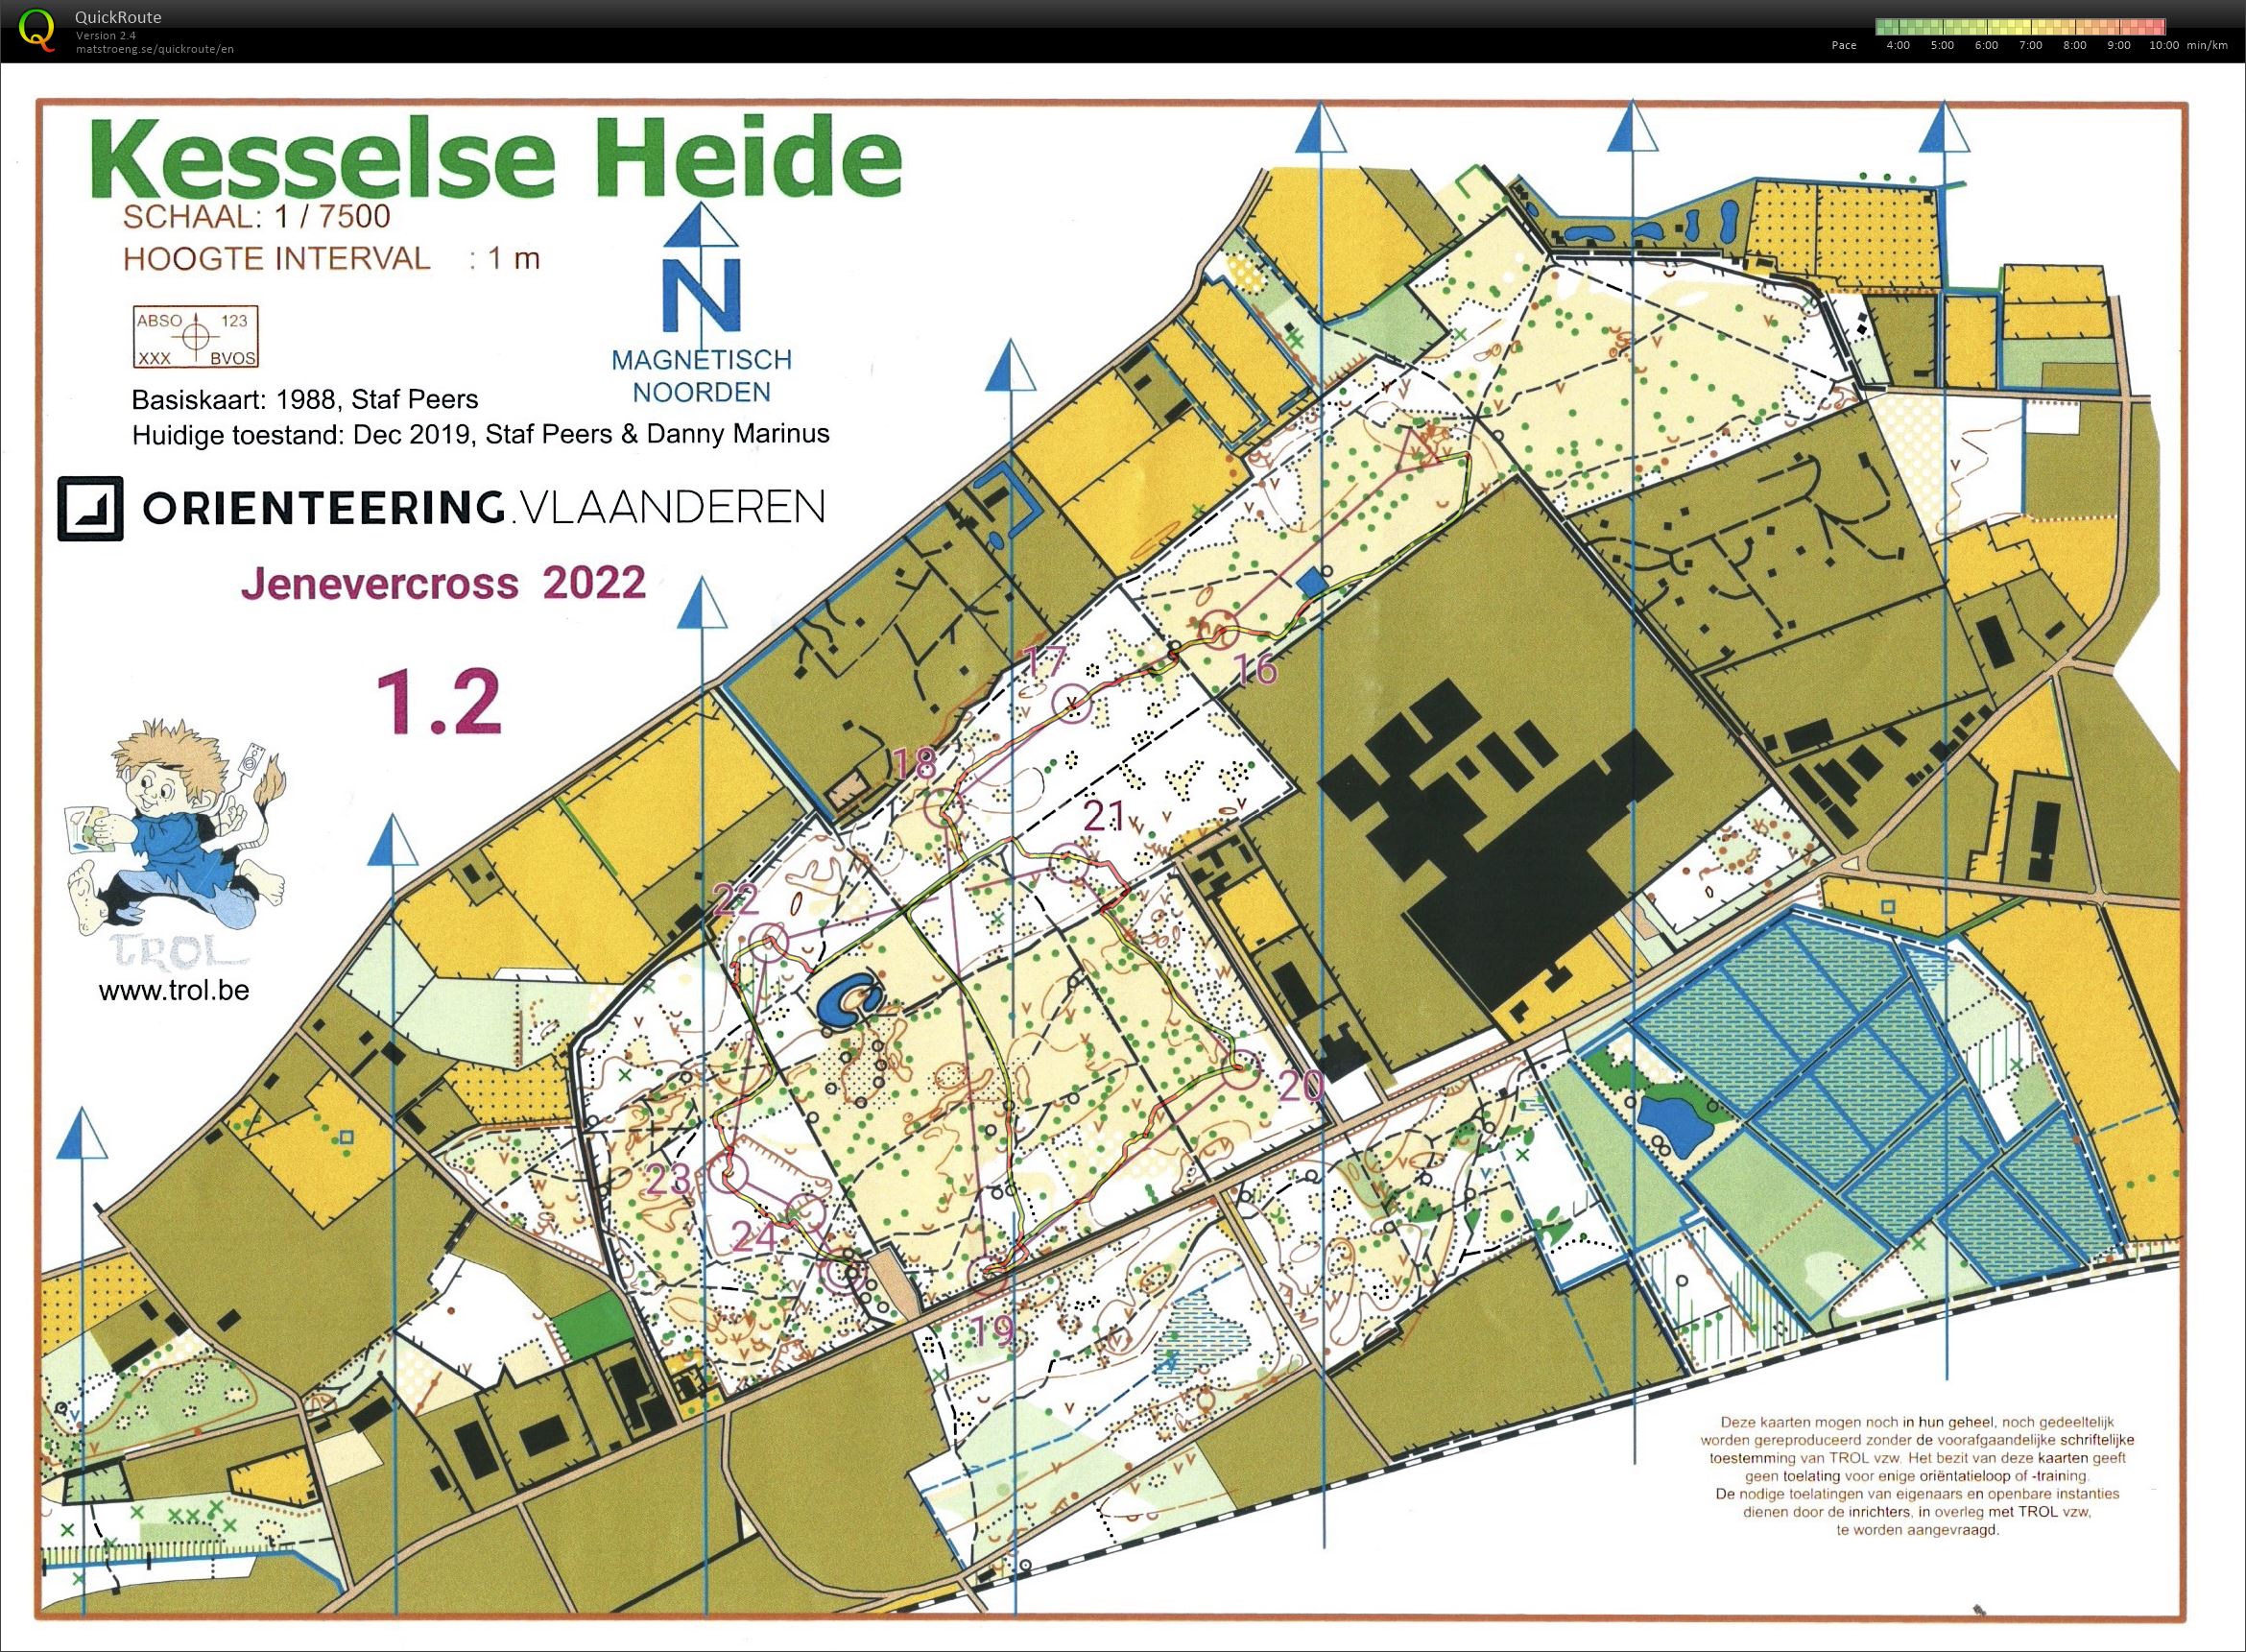 Jenevercross 2022 - Kesselse Heide - 1.2 (07.01.2022)